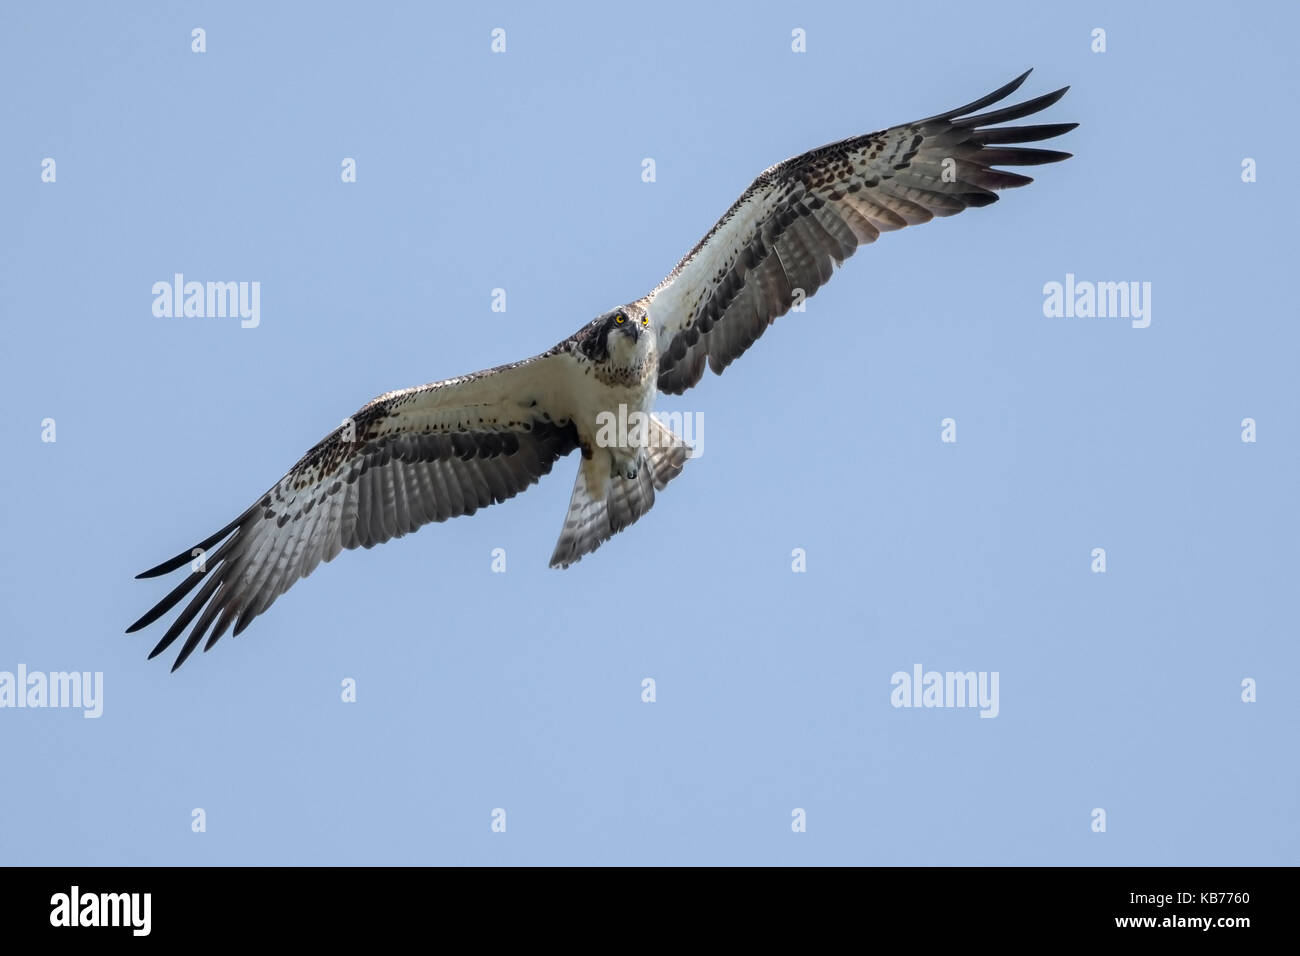 Osprey (Pandion haliaetus)  flying by against a blue sky and looking at camera, The Netherlands, Overijssel, Kampen, Ketelmeer Stock Photo